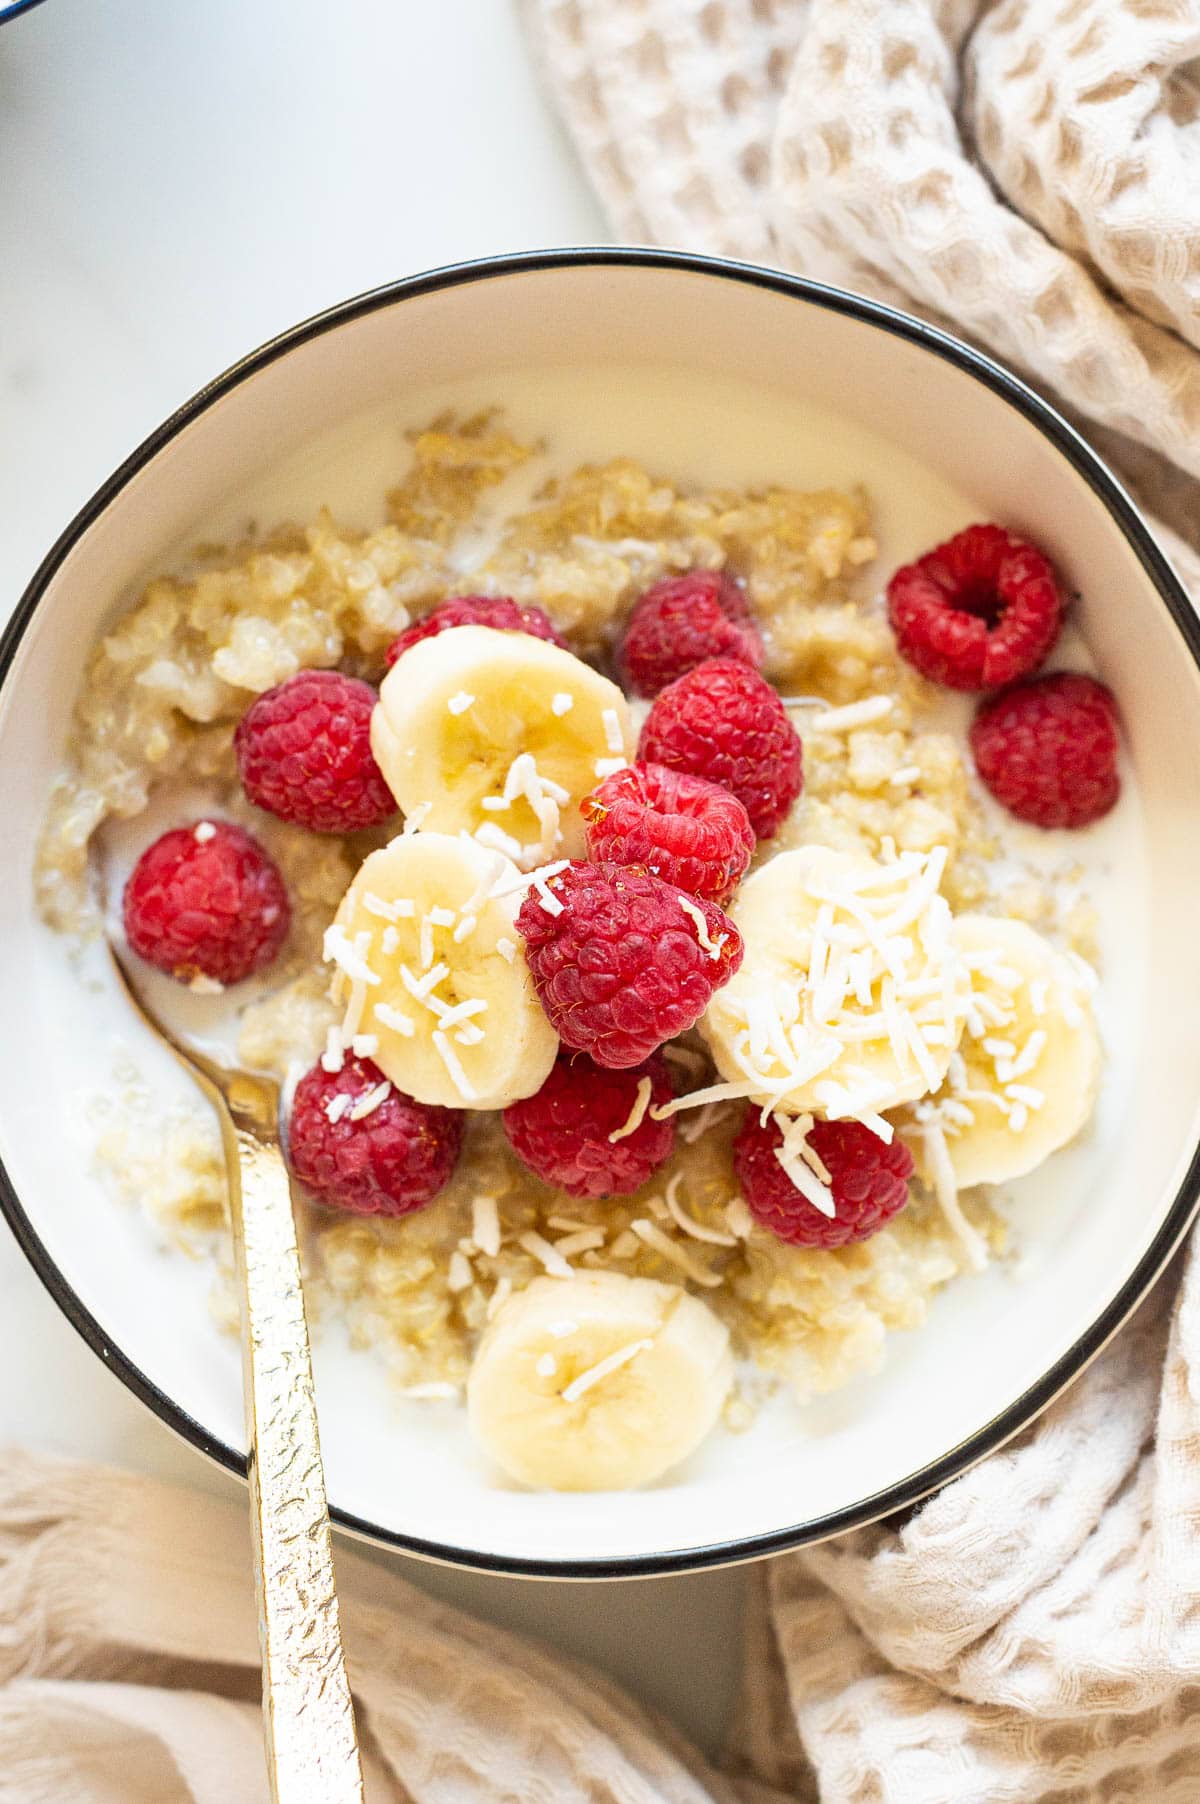 Quinoa breakfast bowl with milk, raspberries, banana and coconut flakes.